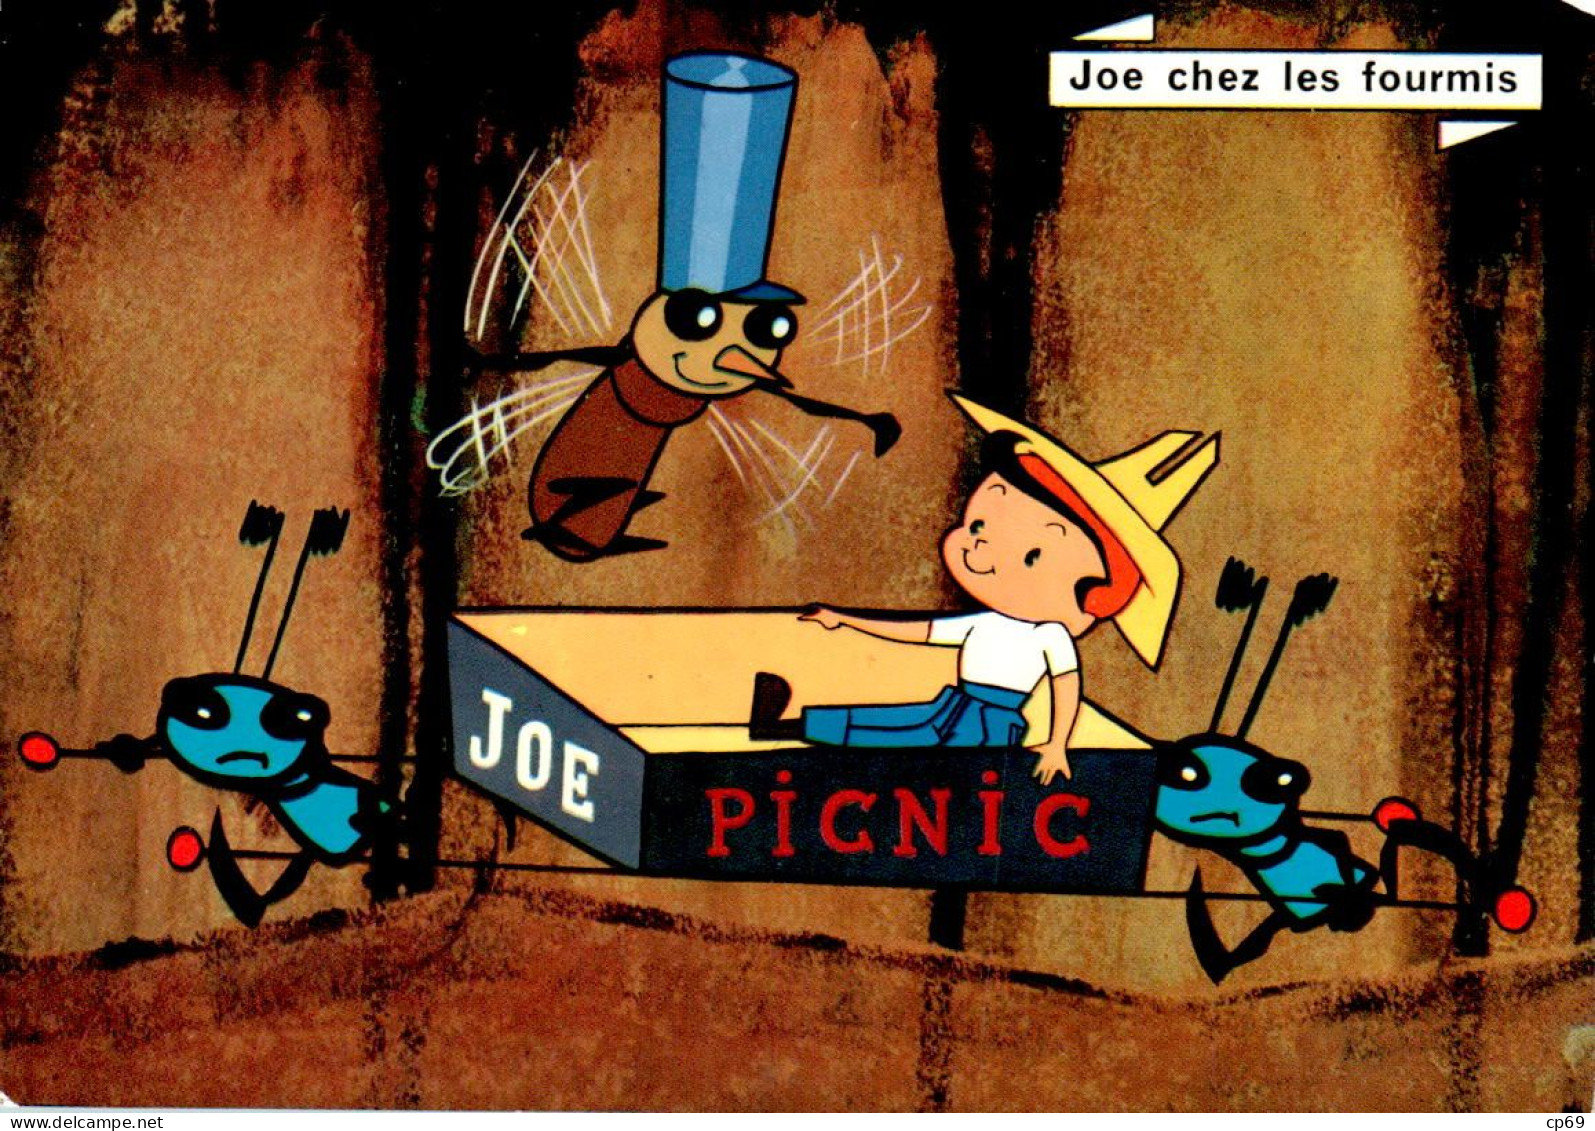 Les Aventures De Joe ORTF Jean Image Joe Chez Les Fourmis RTF Une Partie De Picnic N°4 Fourmi Ant Formica En B.Etat - Séries TV